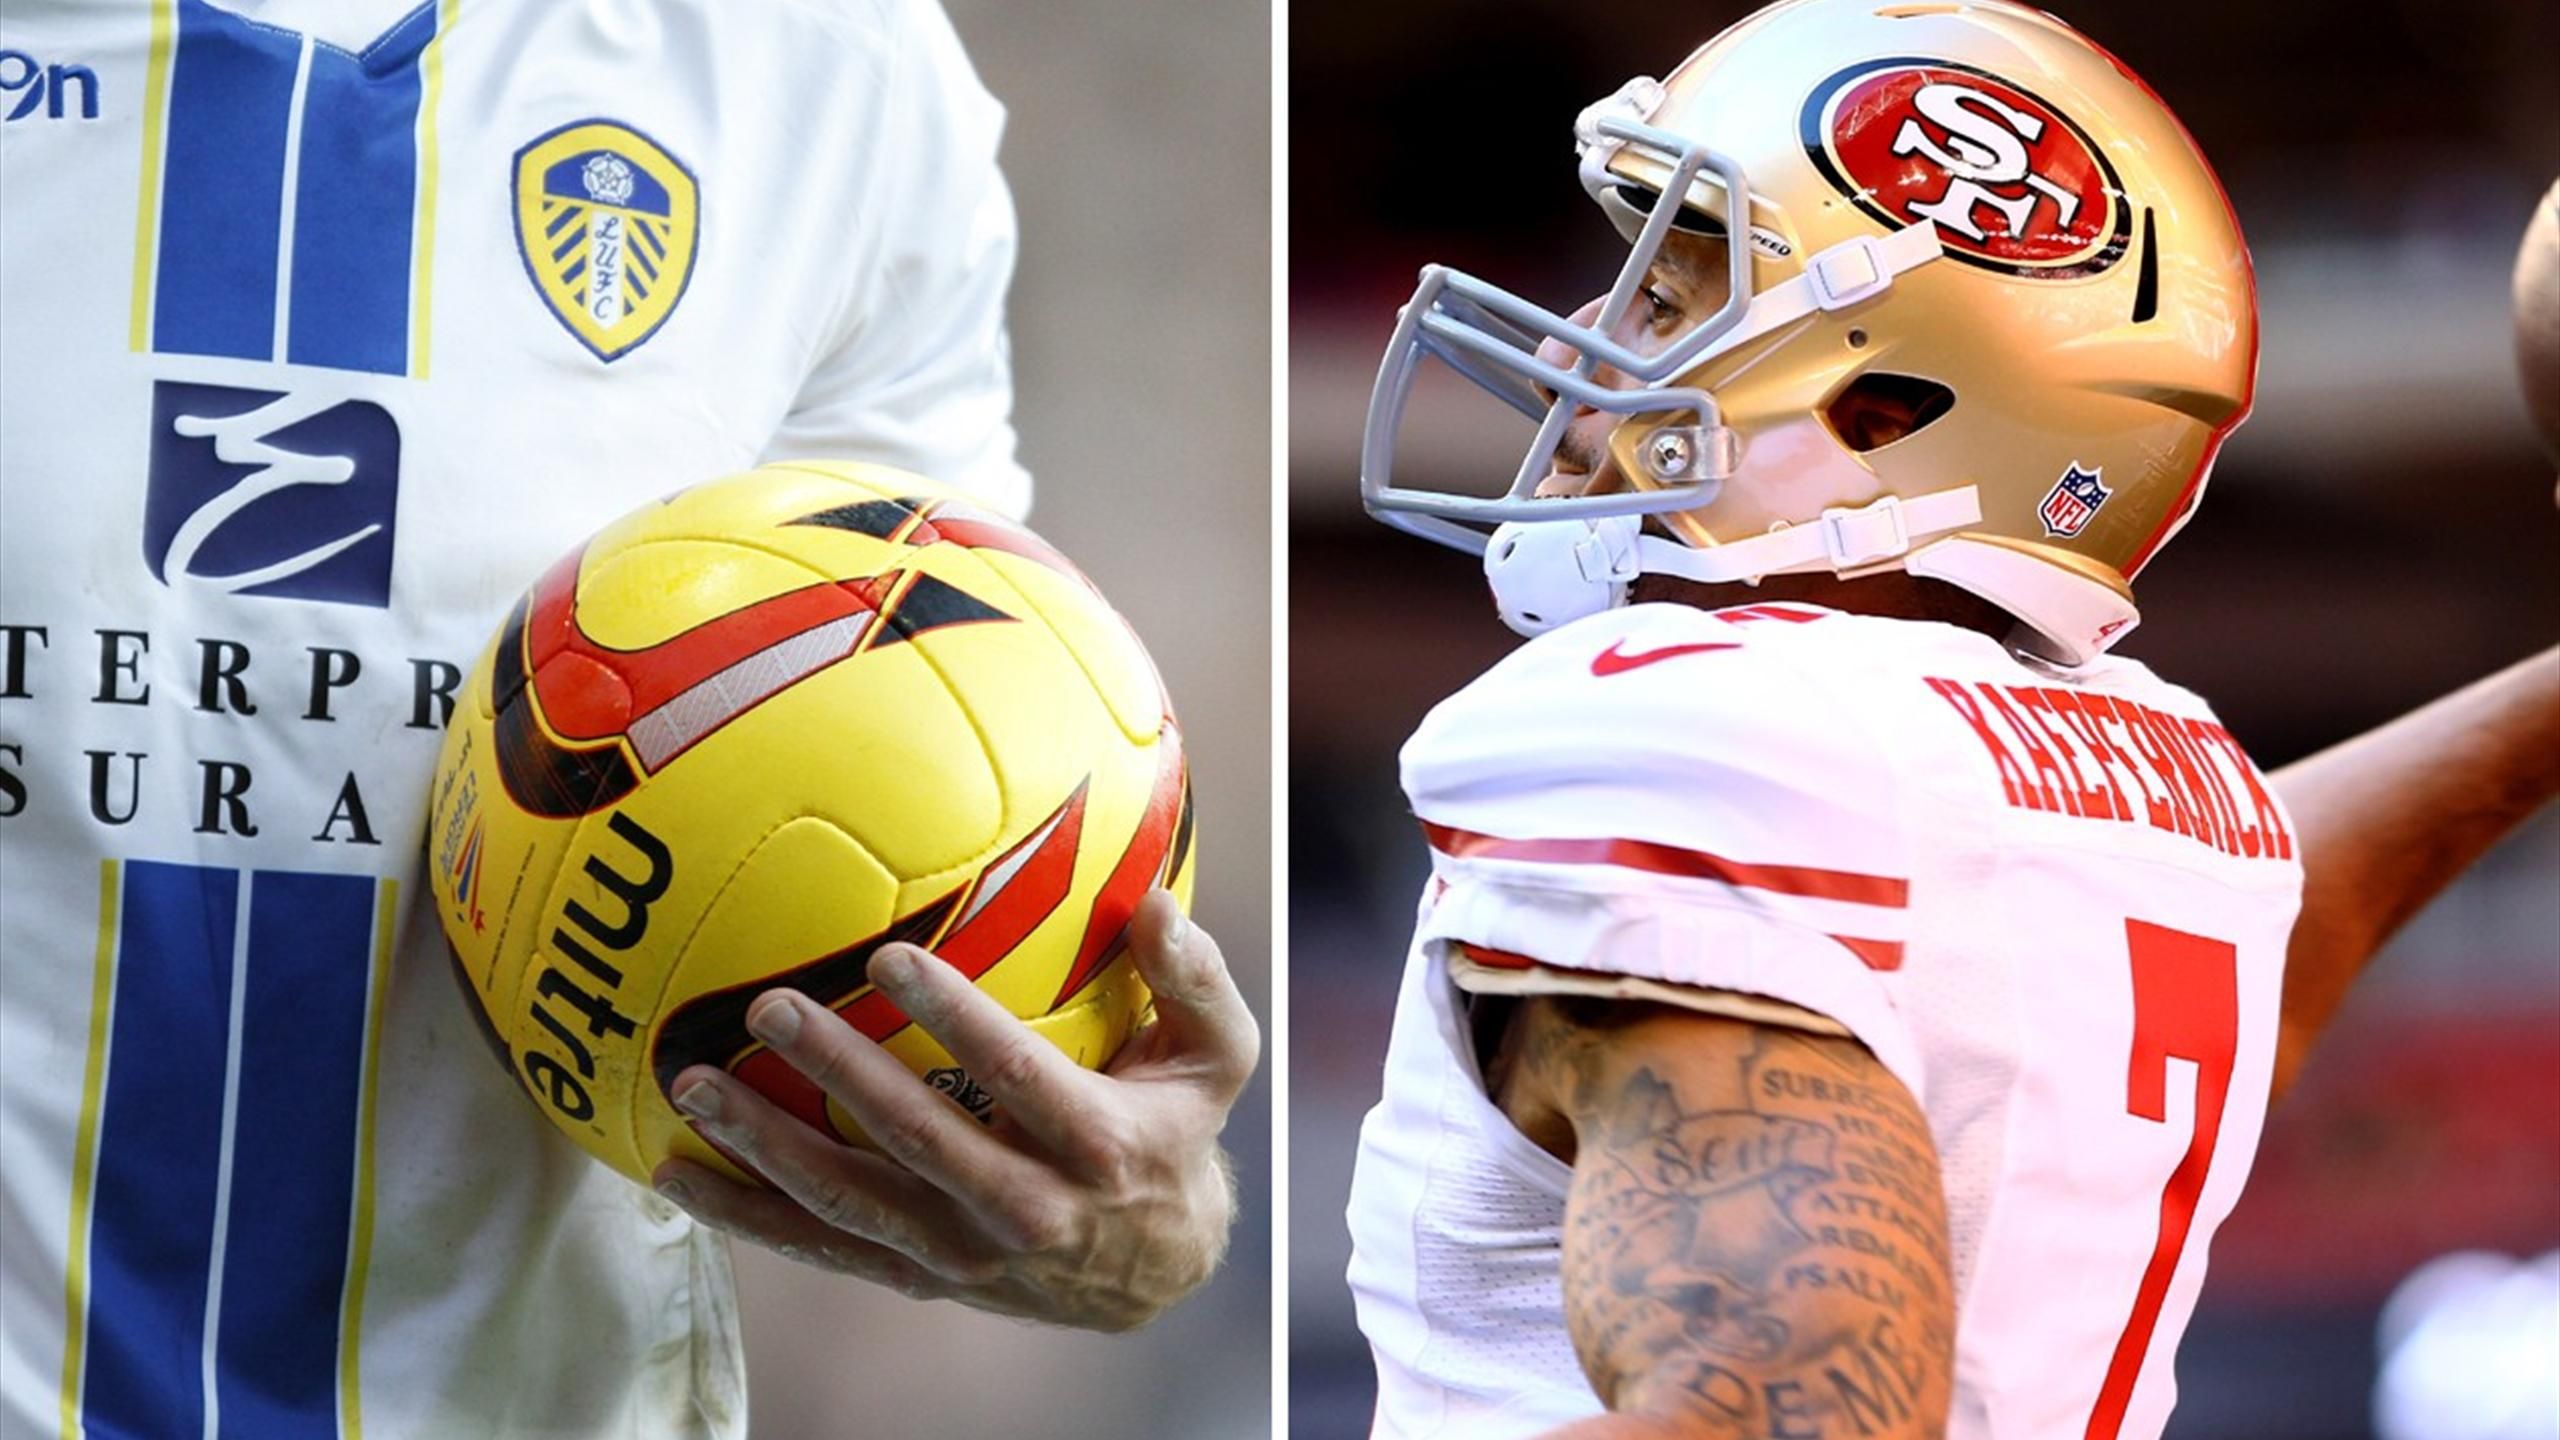 Leeds United link up with San Francisco 49ers - Eurosport